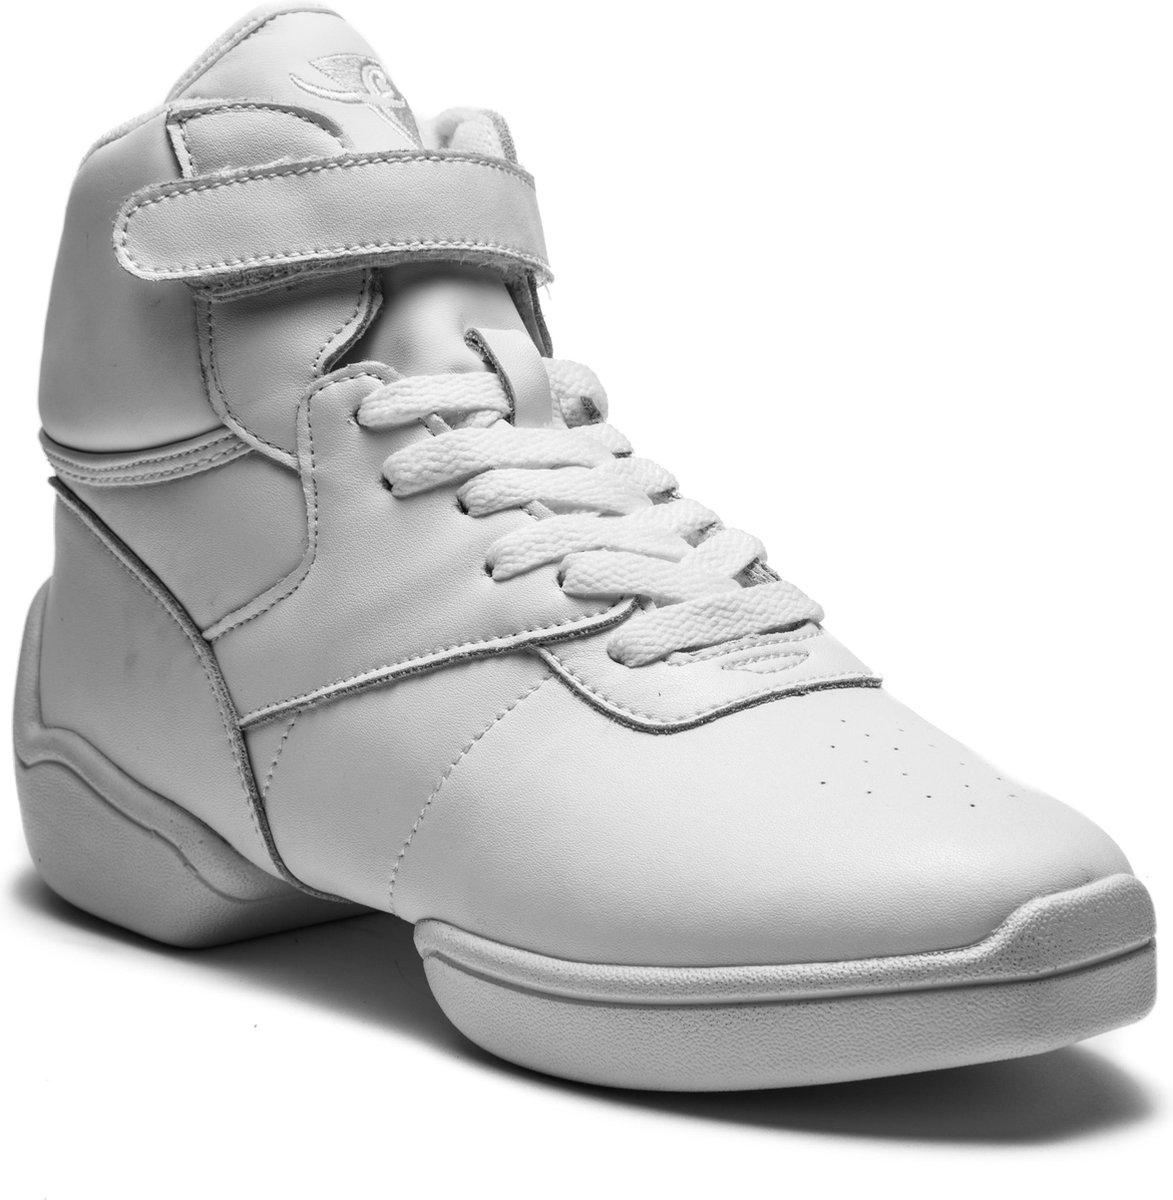 Rumpf 1500 High Top Sneaker Leather upper white Jazz Street Hip Hop wit Maat 42.5, UK 8.5